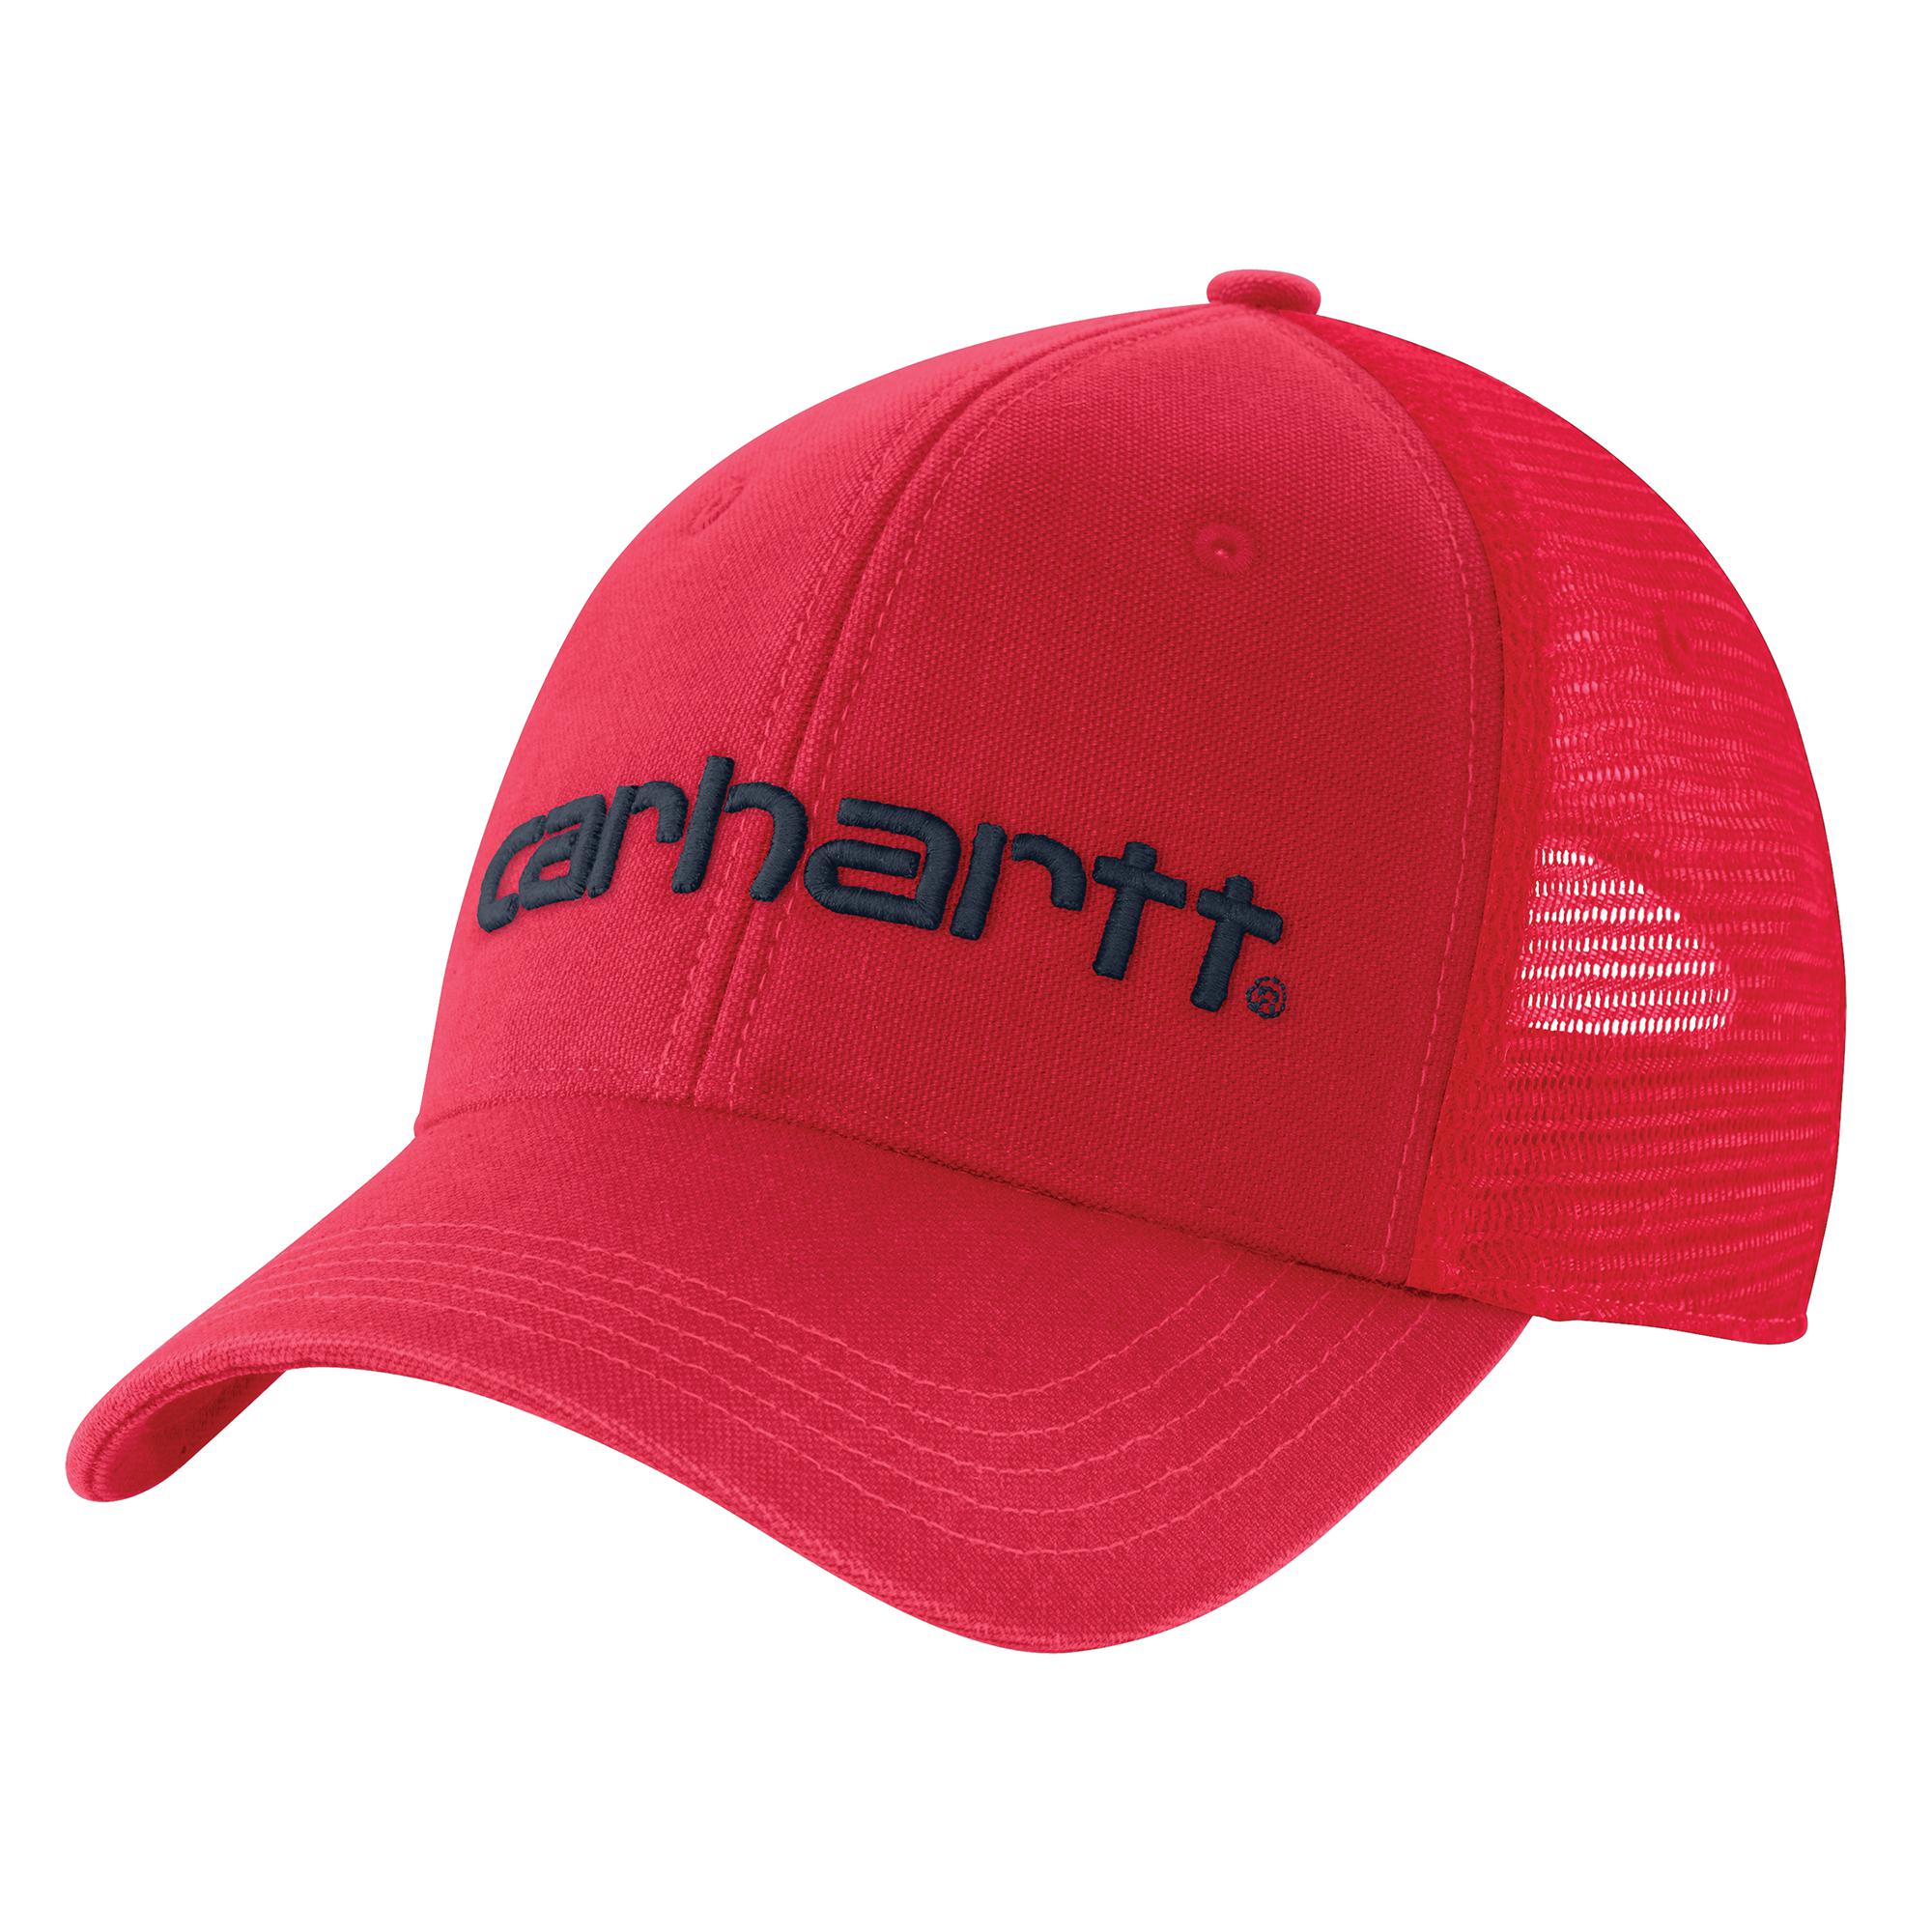 Carhartt Mens Baseball Hats Sports Adjustable Cap Coffee - Top